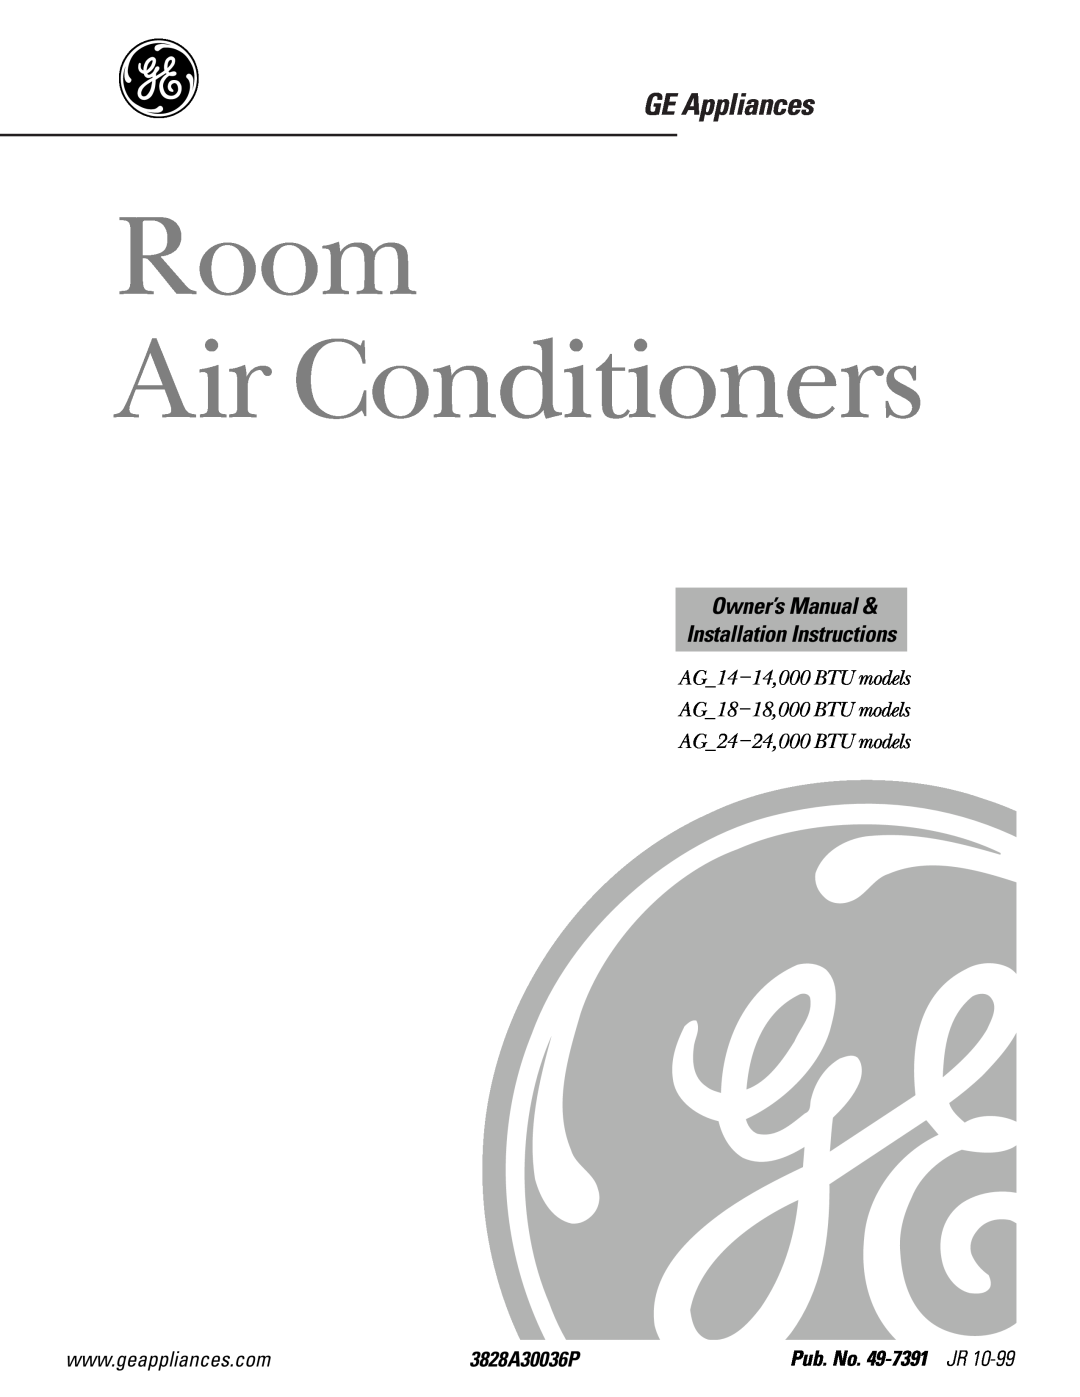 GE owner manual 3828A30036P, Room Air Conditioners, GE Appliances, AG 14 -14,000BTU models AG 18 -18,000BTU models 